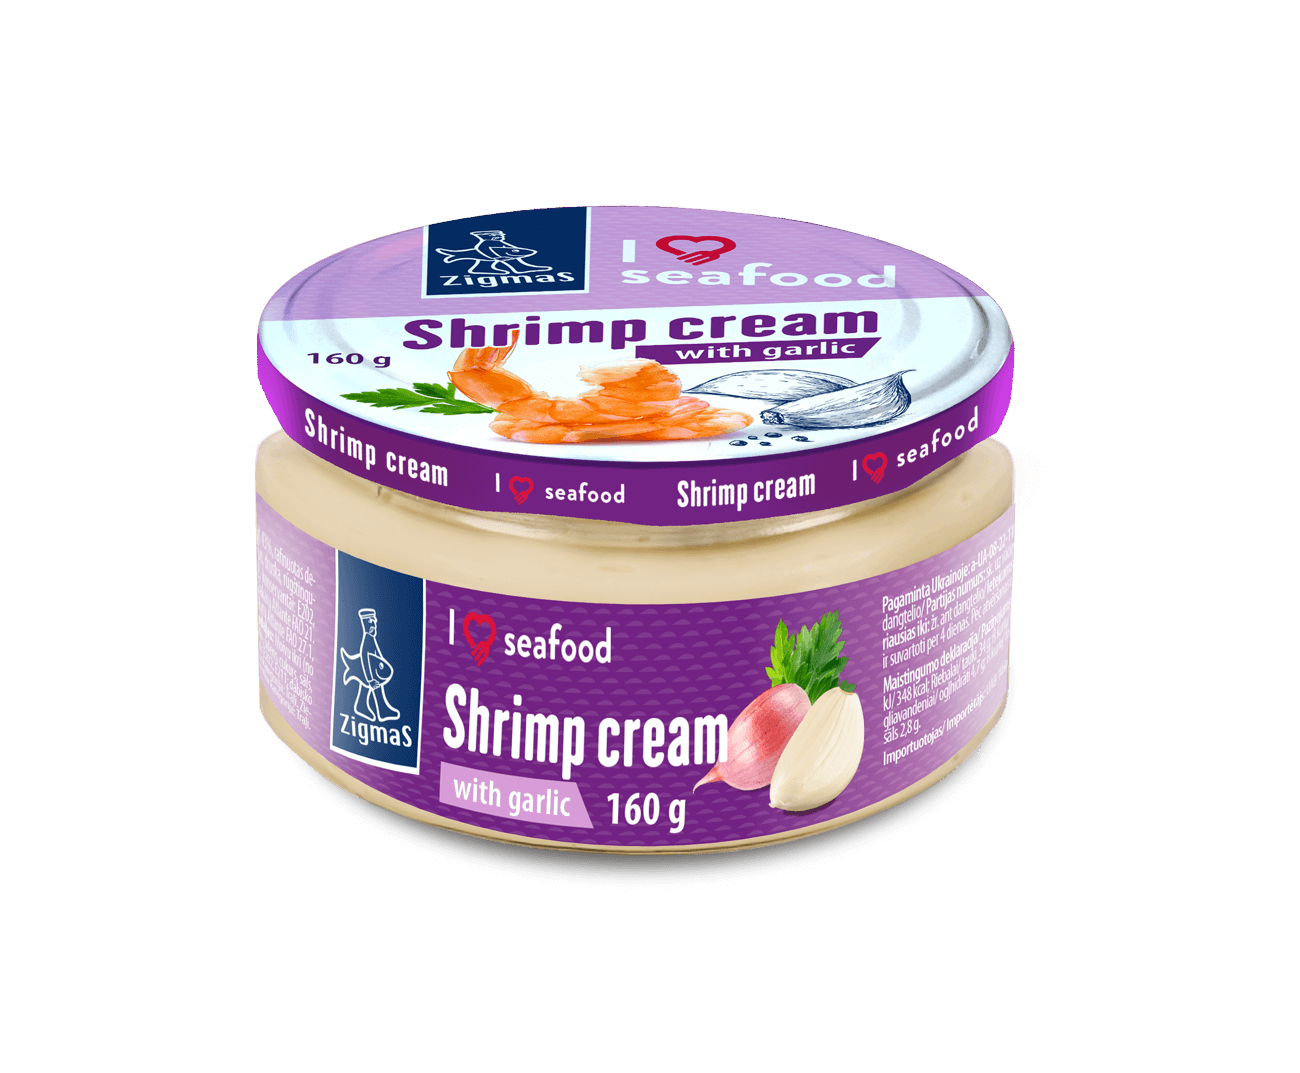 Shrimp cream with garlic